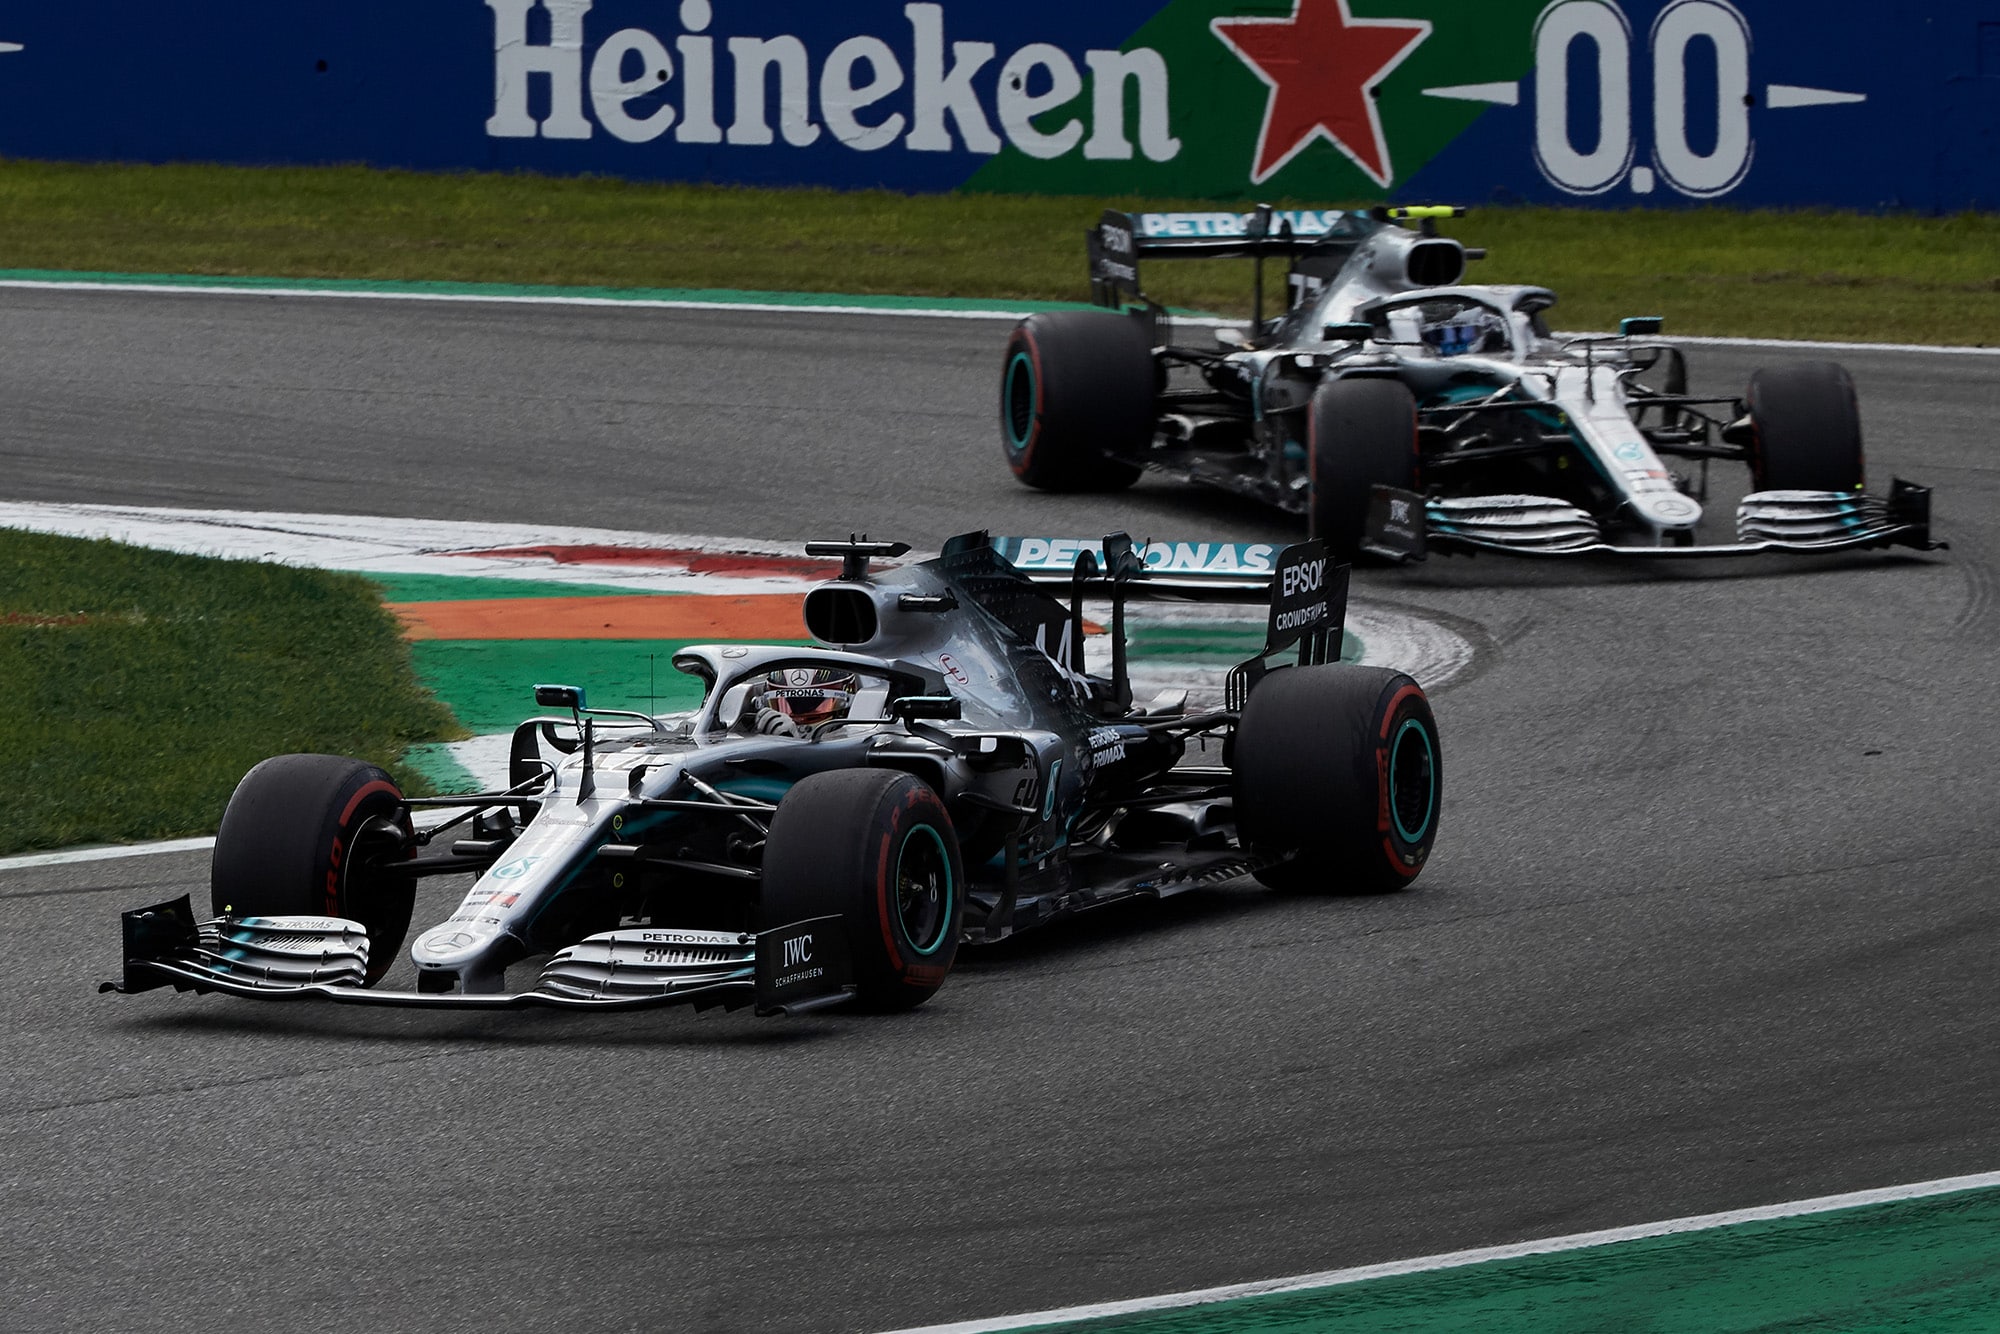 Lewis Hamilton and Valtteri Bottas in the 2019 Mercedes-AMG W10